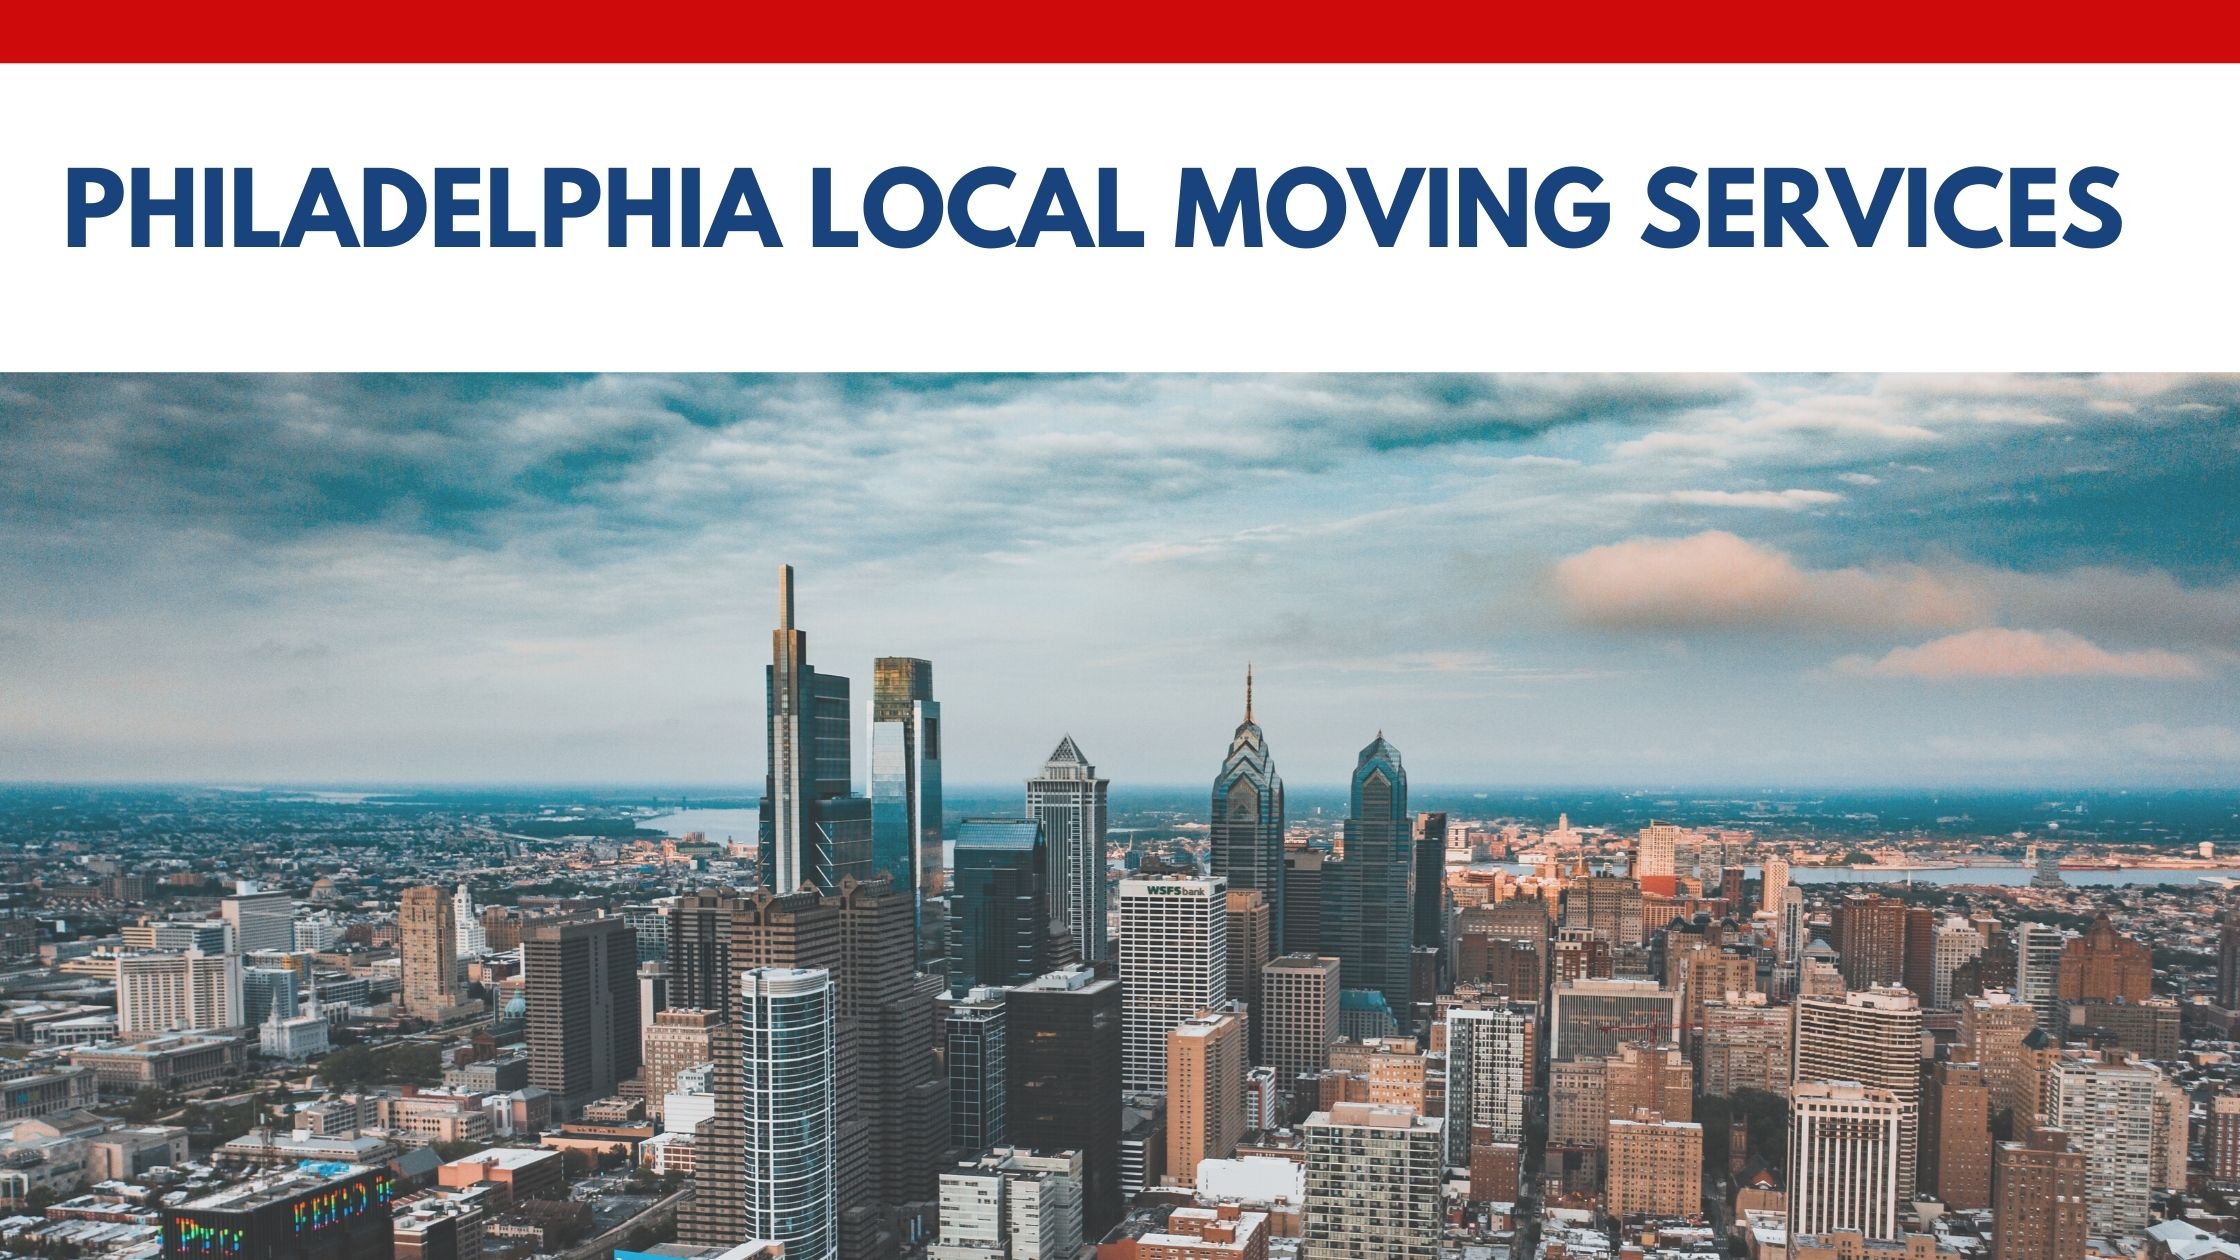 Philadelphia Local Moving Services